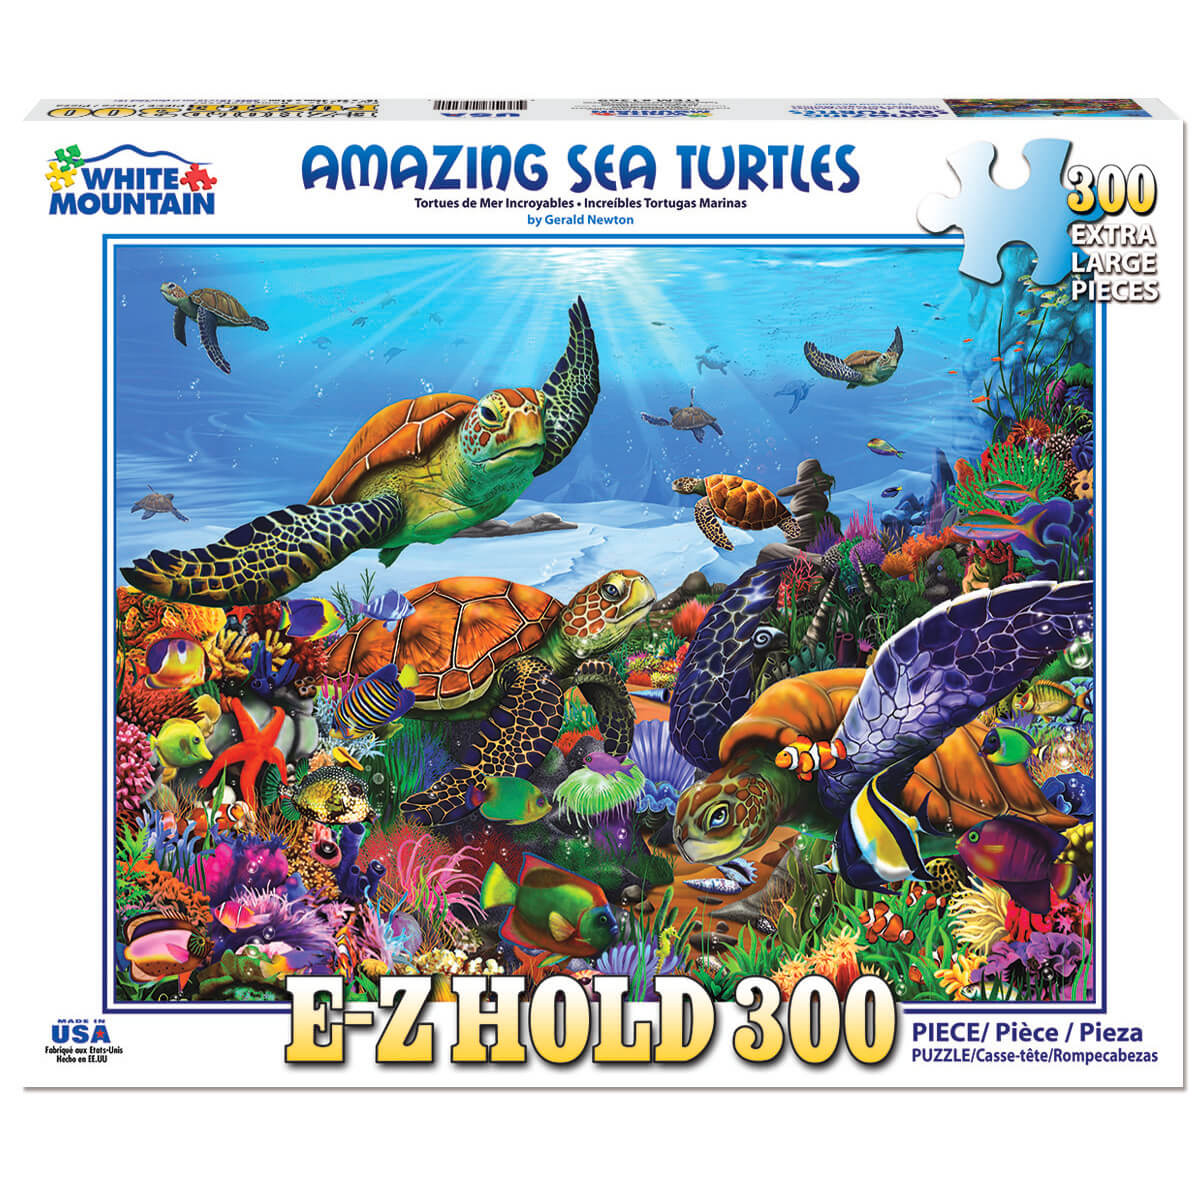 White Mountain Puzzles Amazing Sea Turtles 300 Piece Jigsaw Puzzle